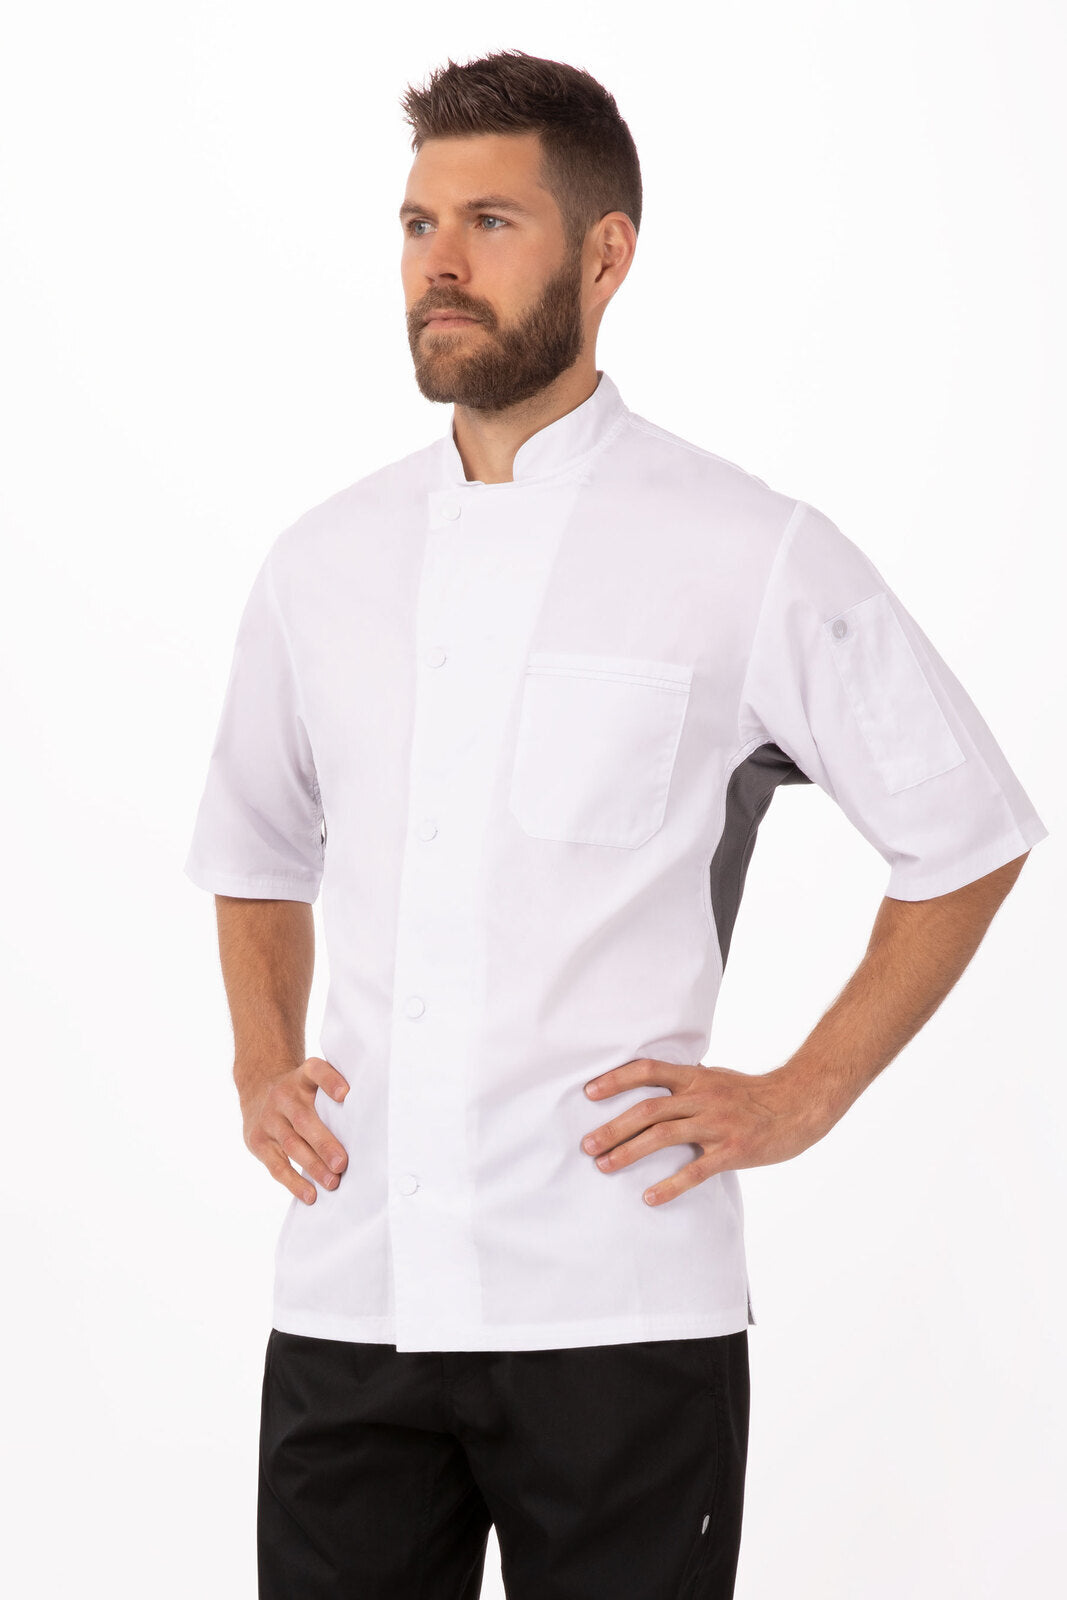 Chef Works - Valais V- Series Chef Jacket